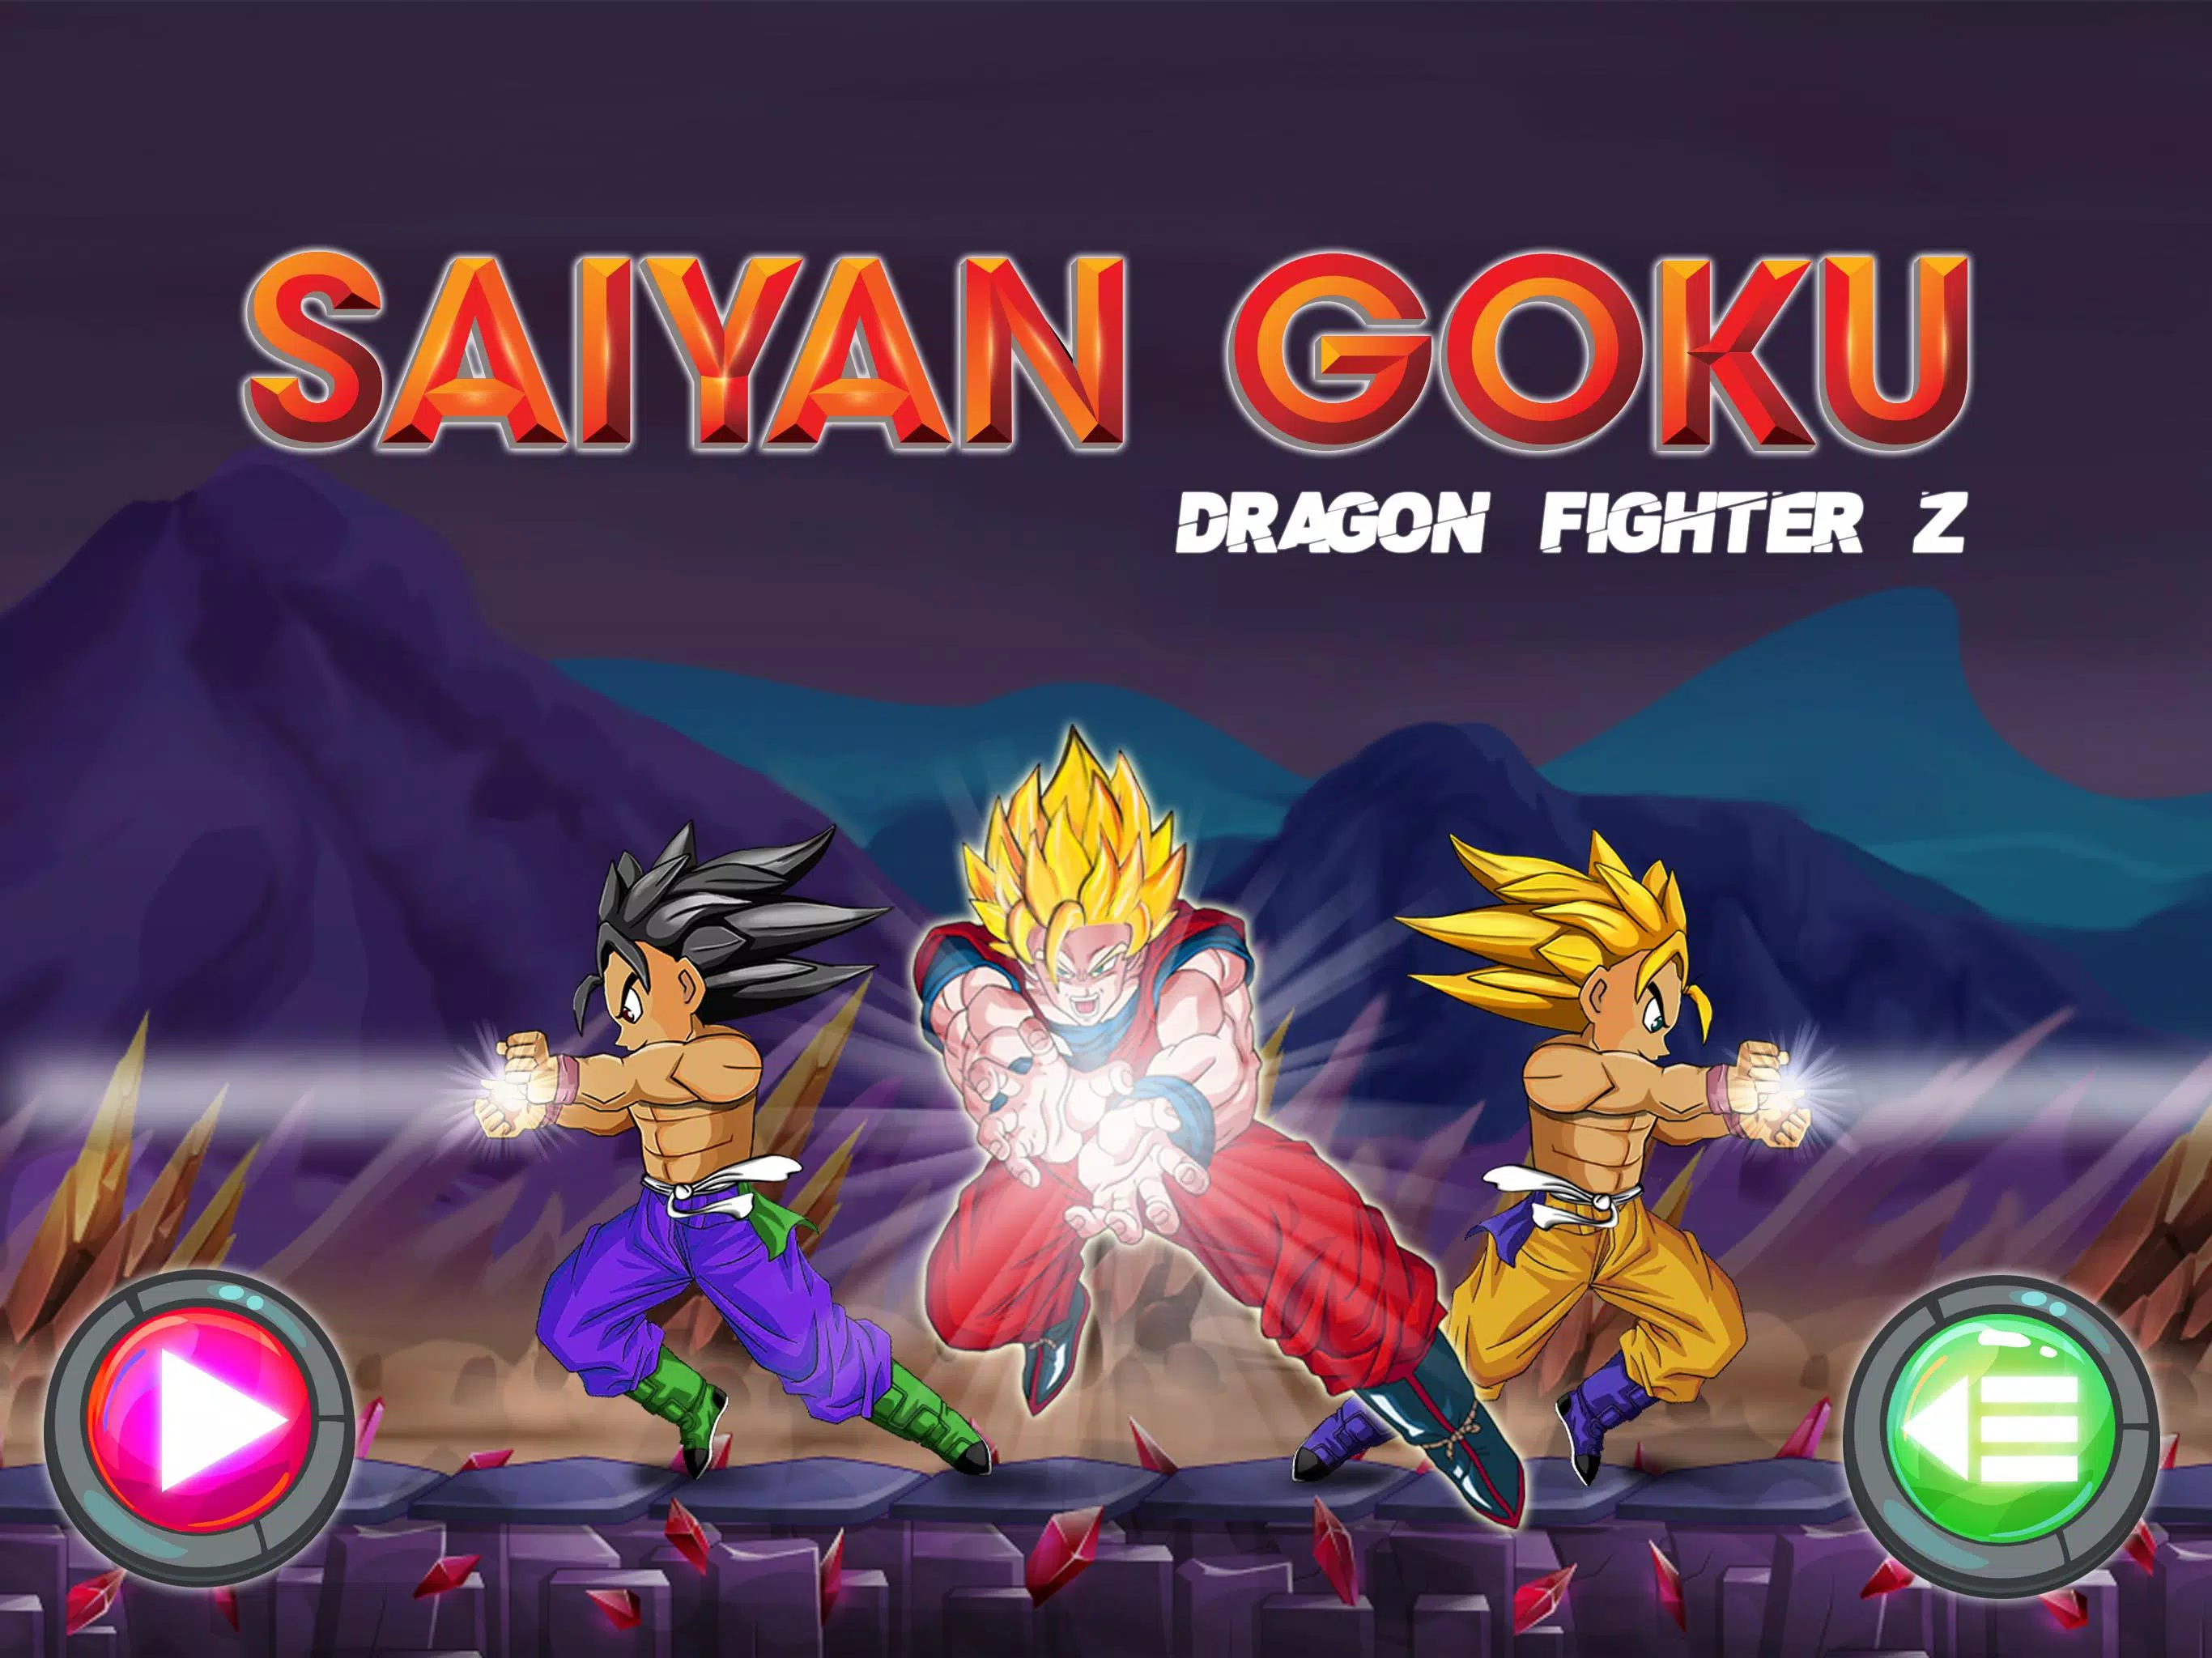 Saiyan Goku Dragon Fighter Z APK for Android Download